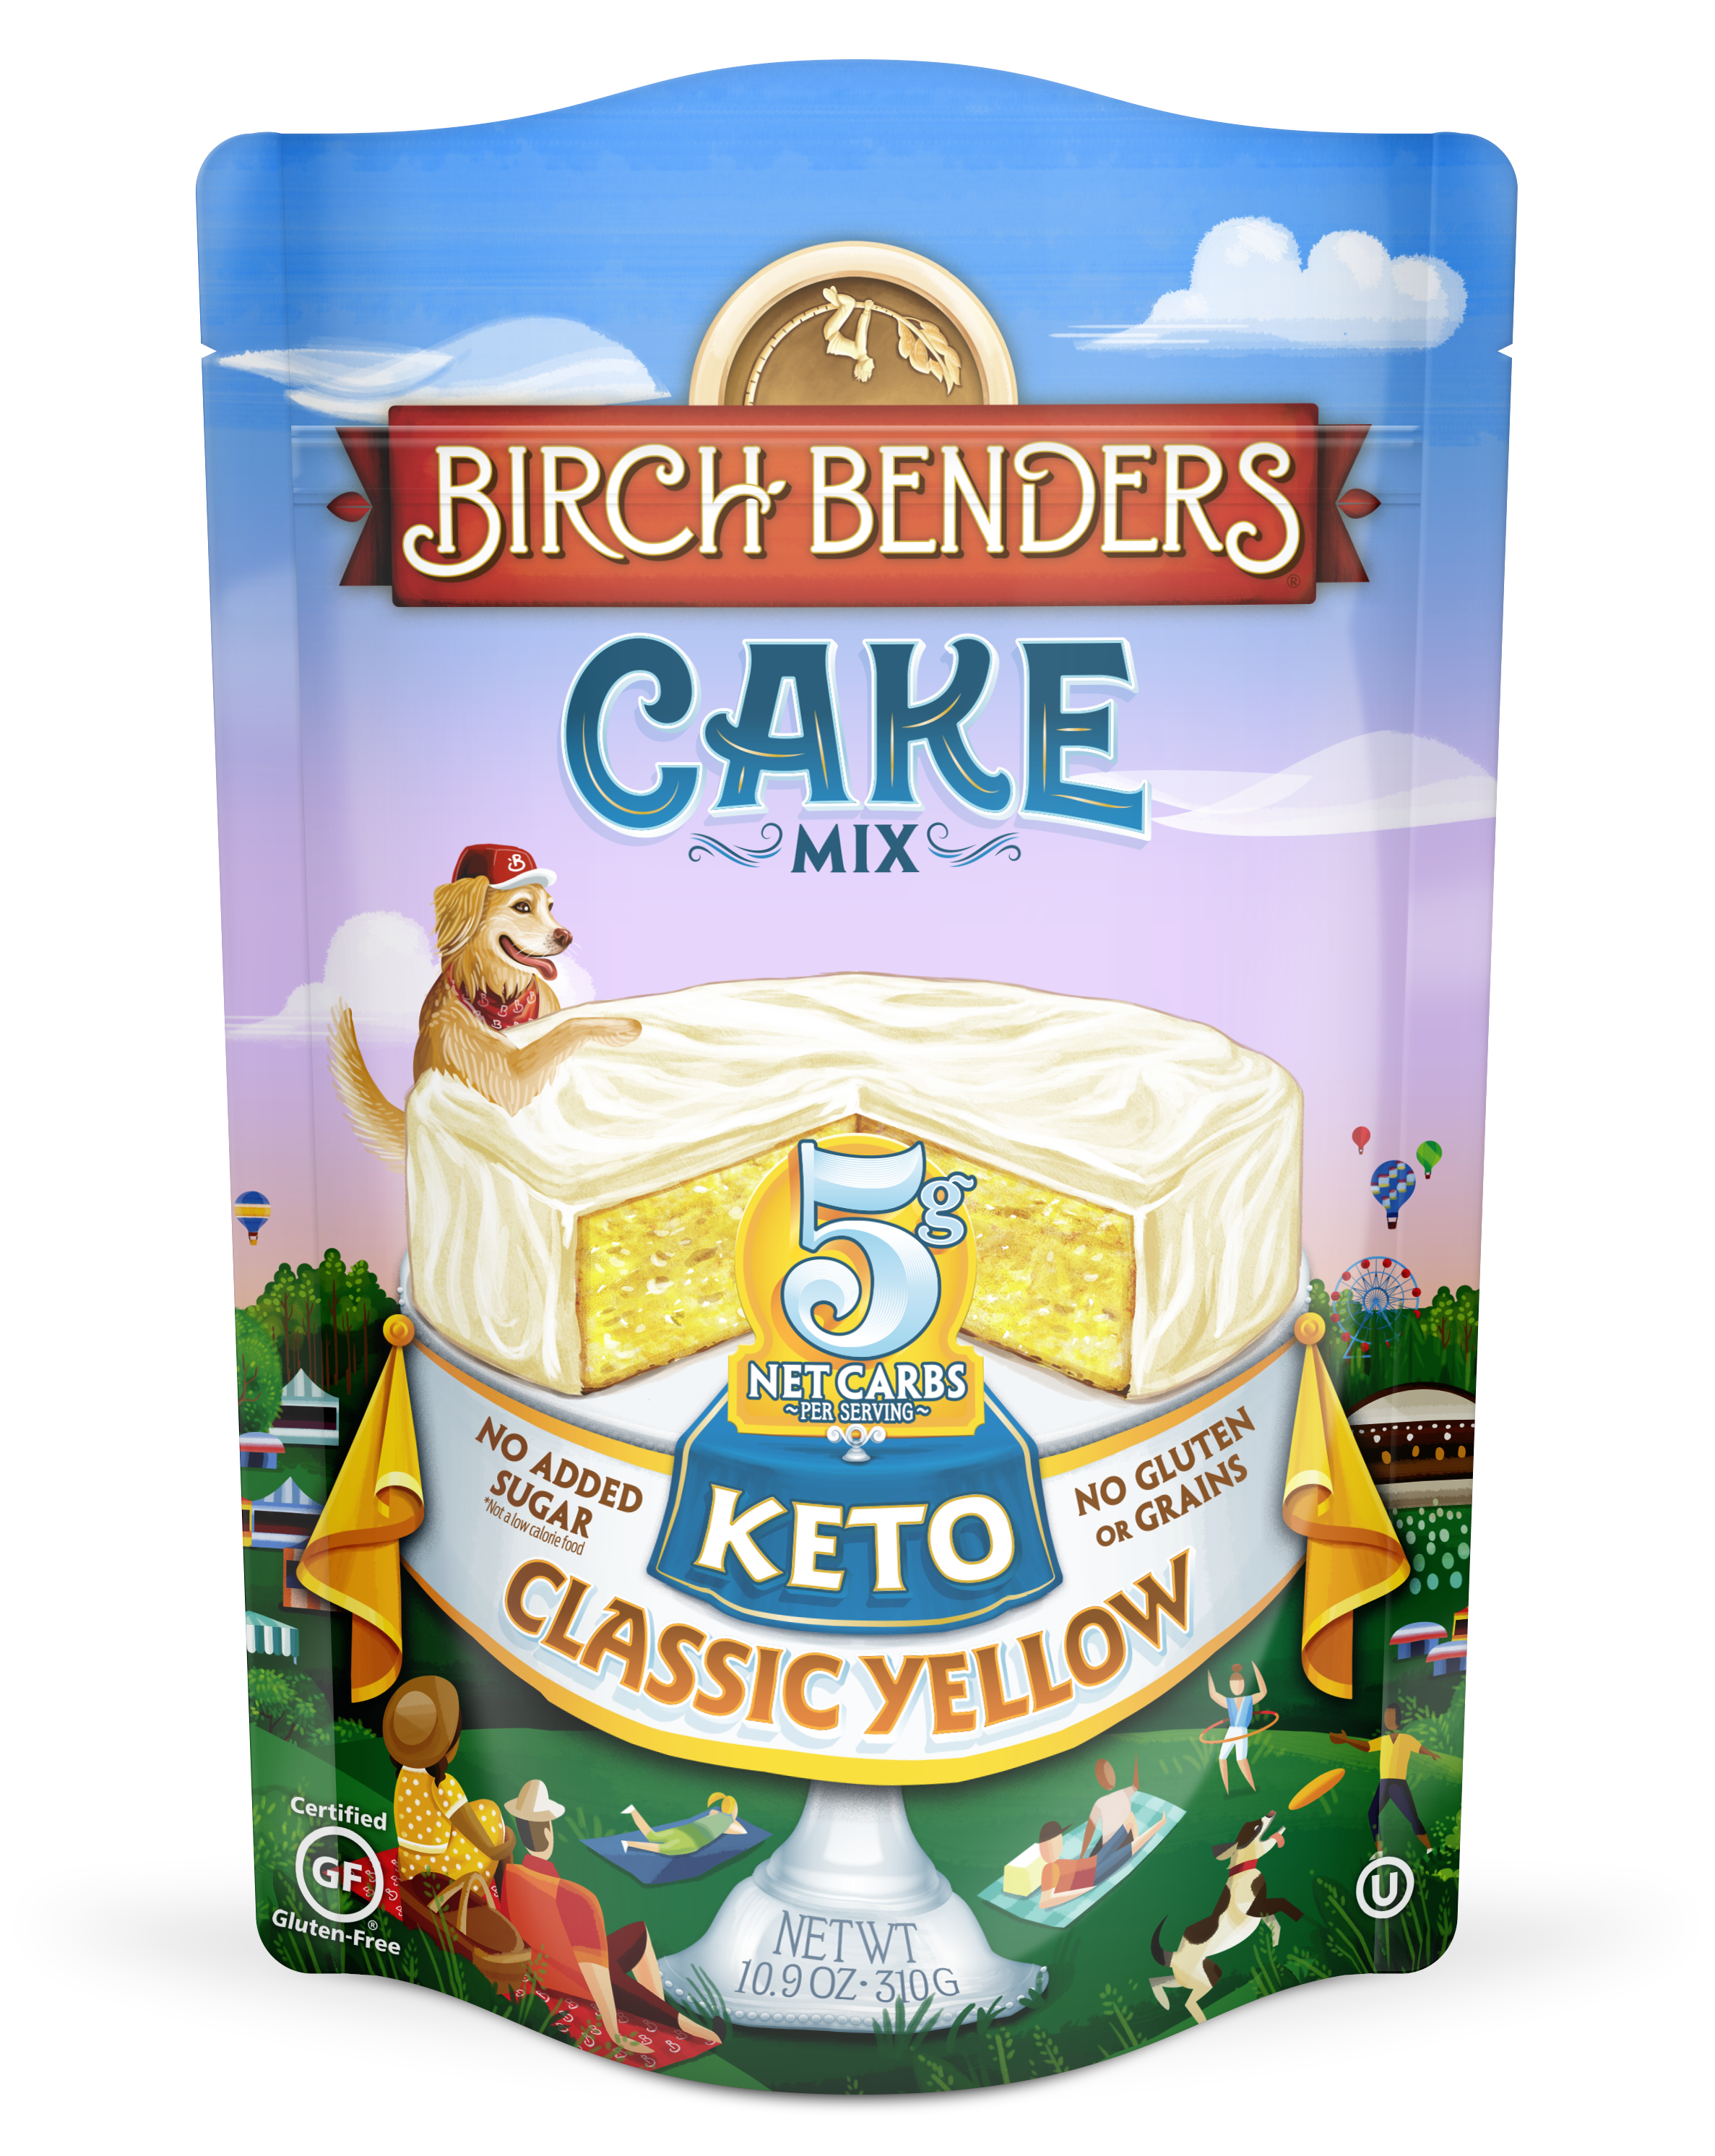 Birch Benders Keto Classic Yellow Cake Mix, 10.9oz